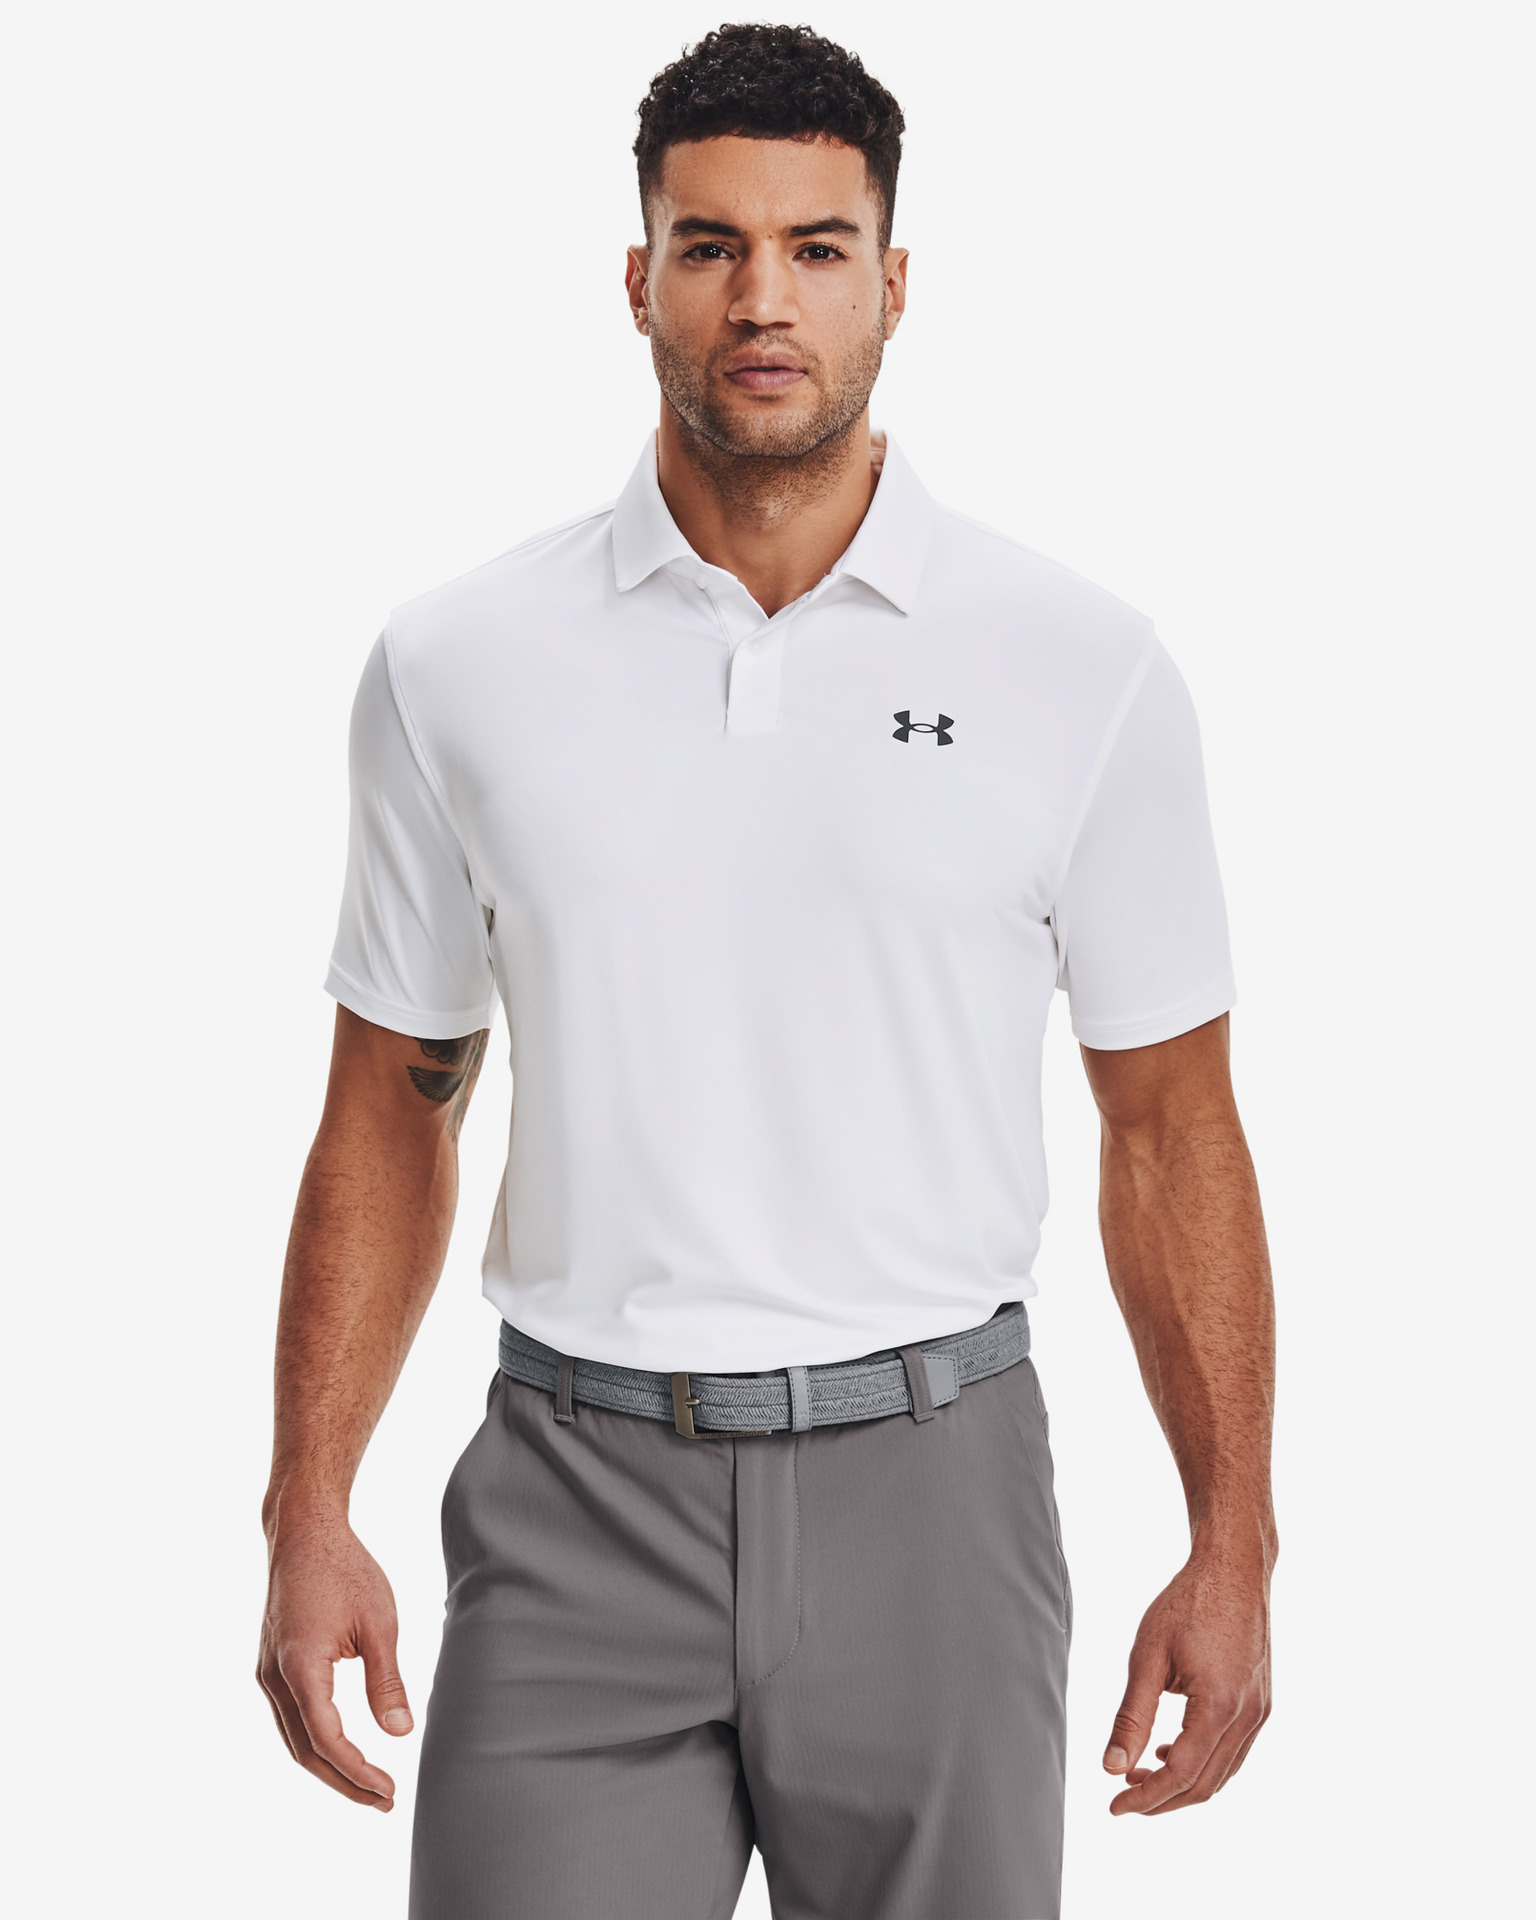 Under Armour Men's Performance Textured Golf Polo Shirt